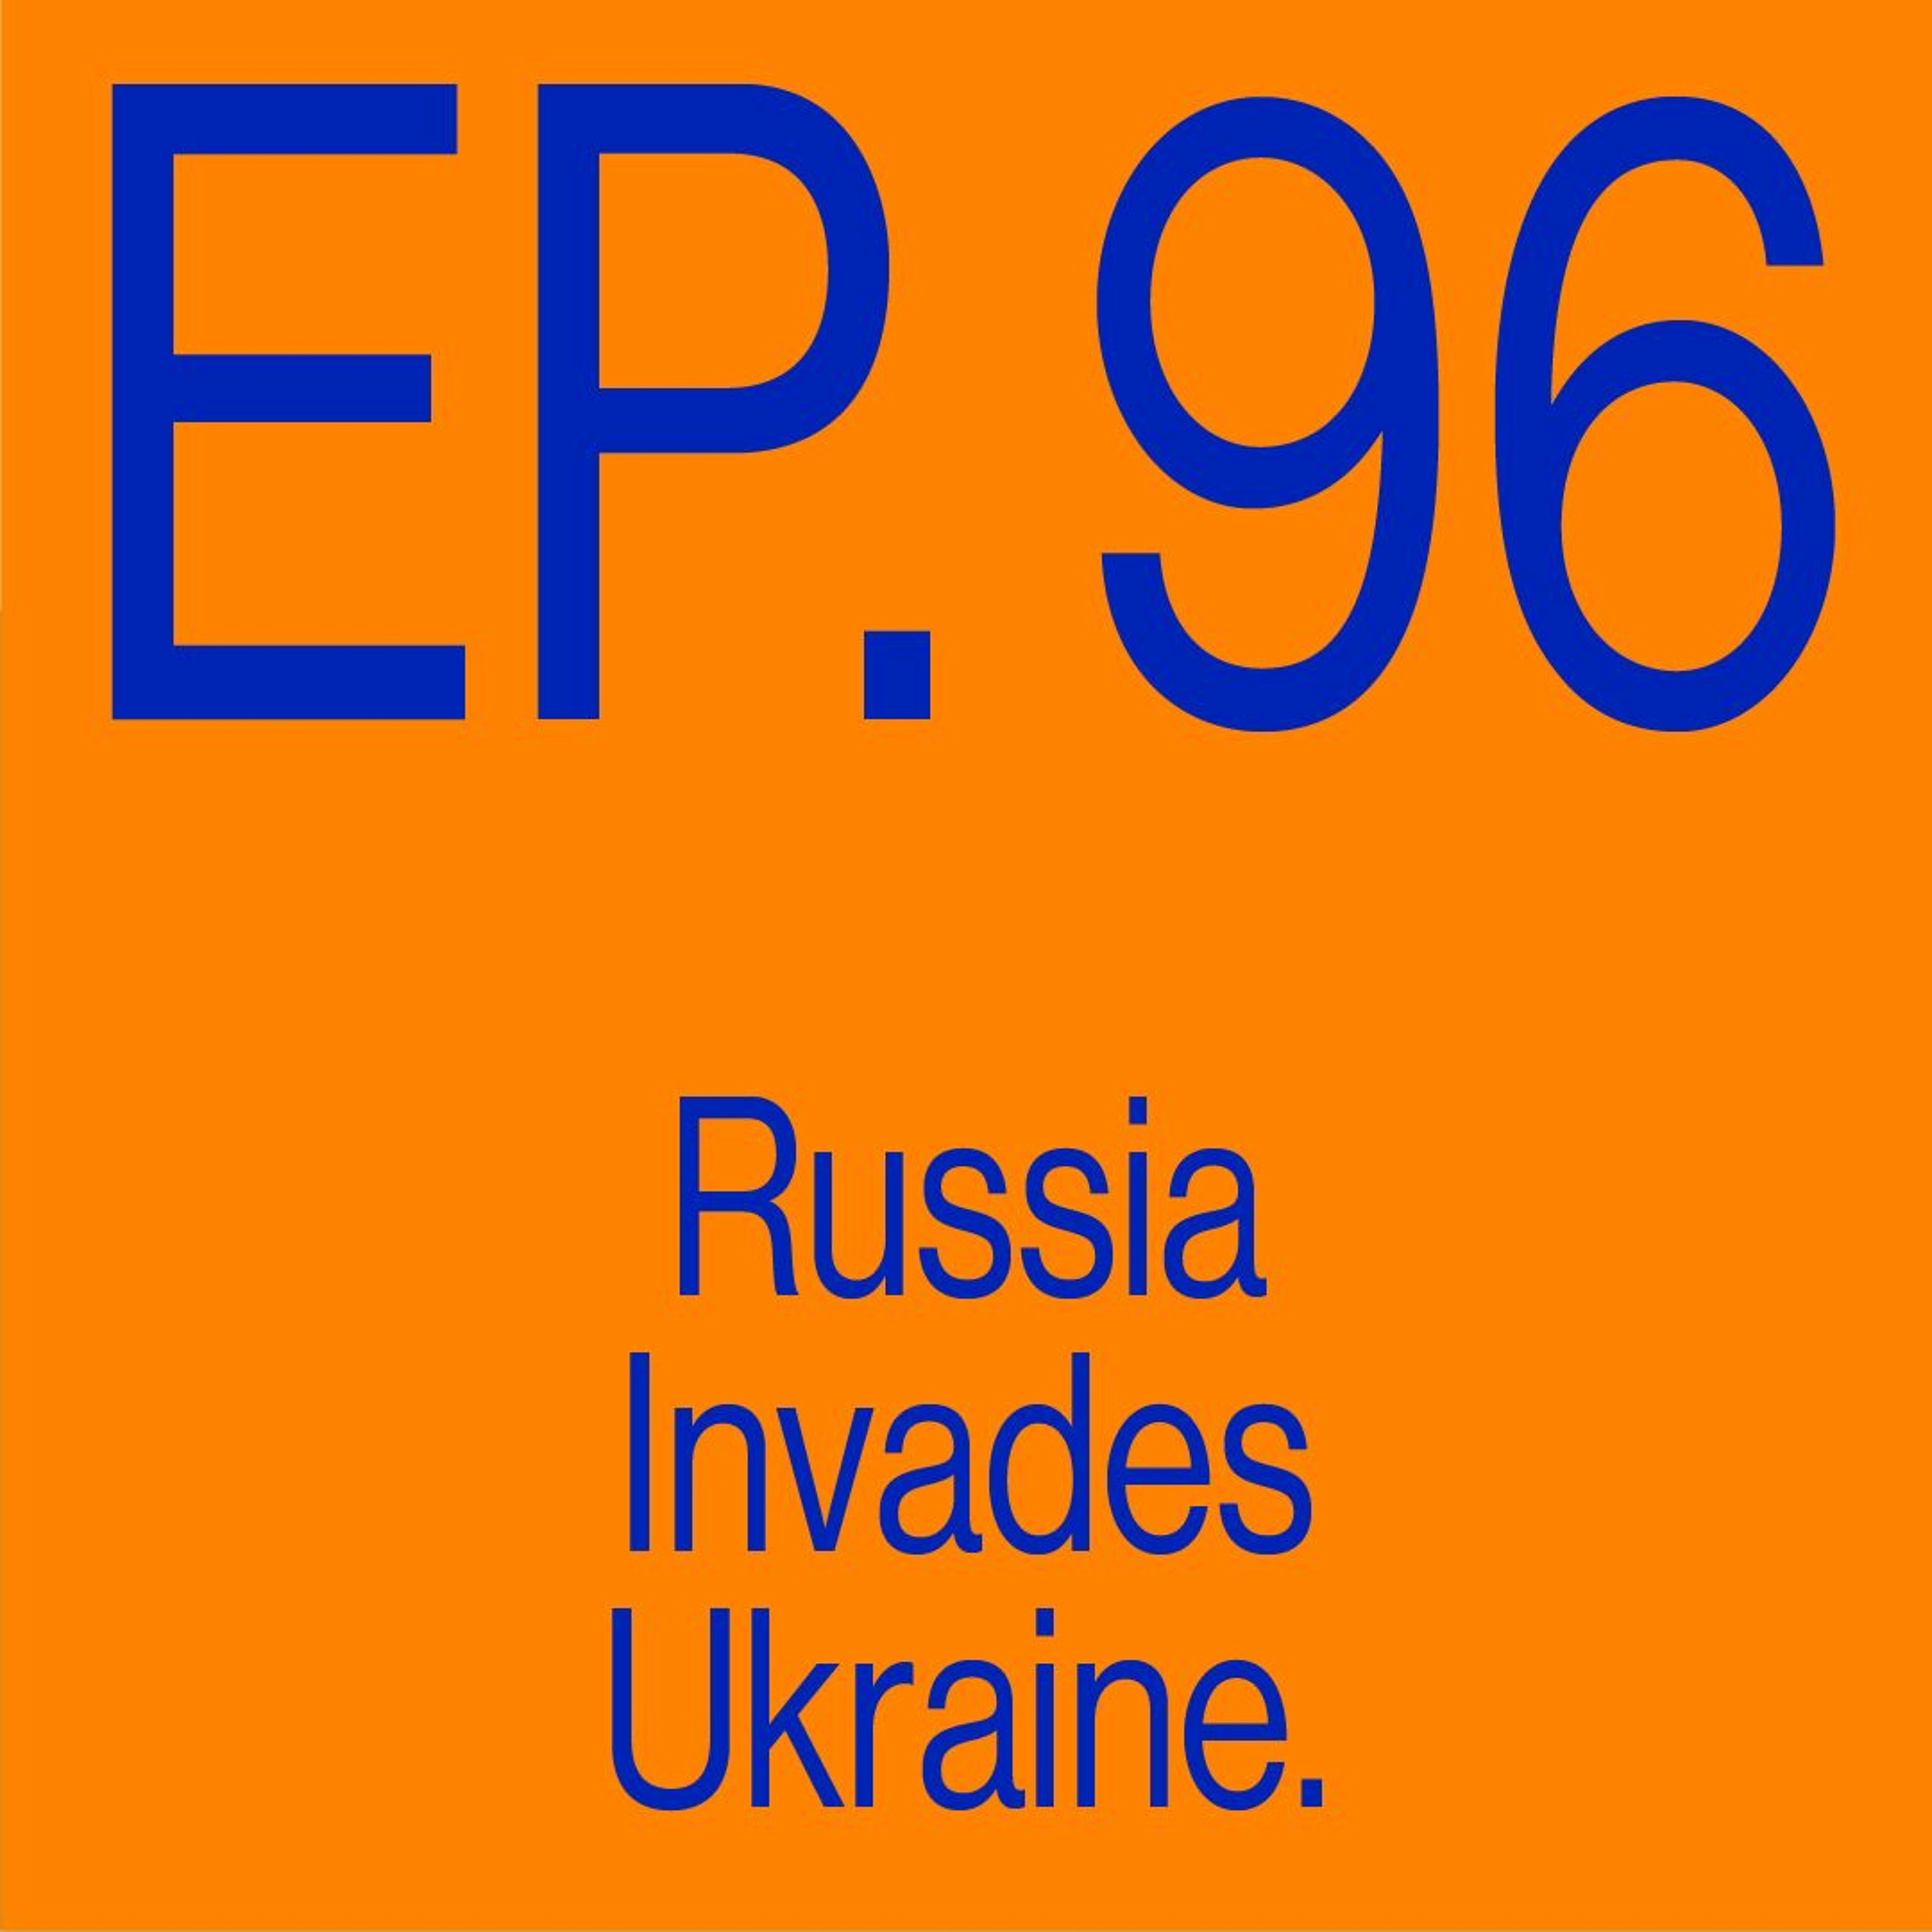 Epsiode 96: Russia Invades Ukraine